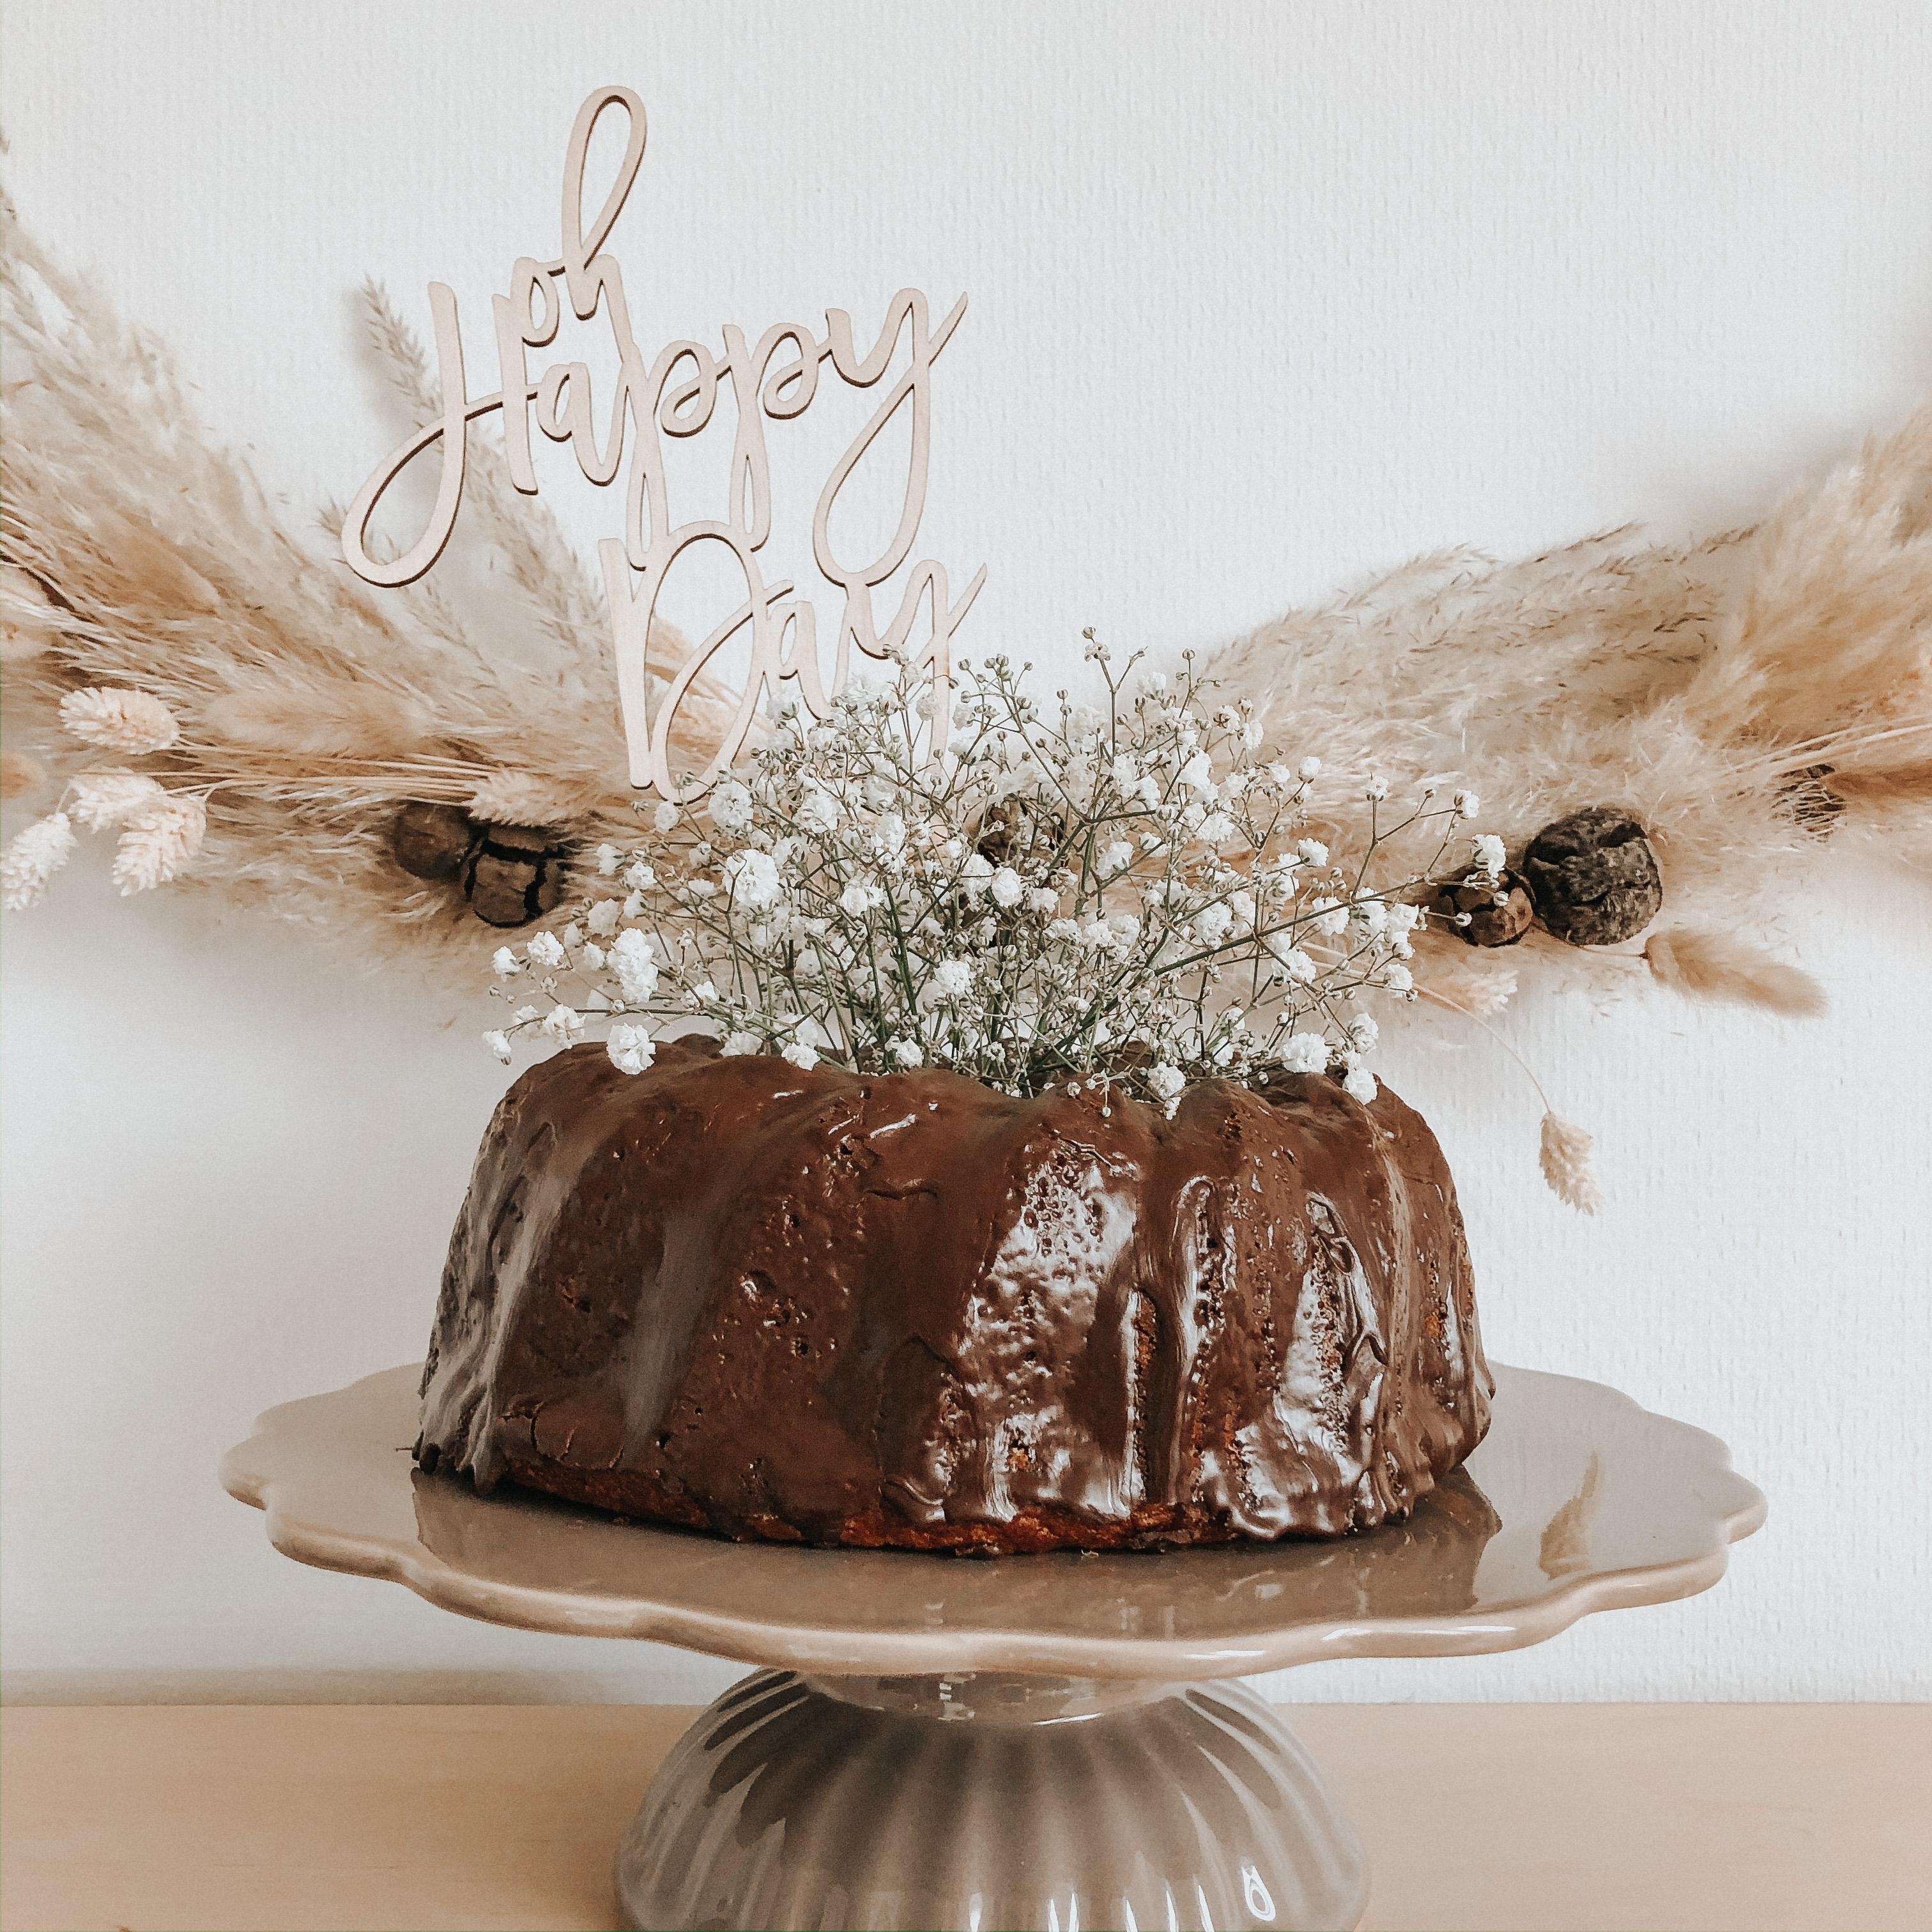 #birthdaycake #cake #marmorkuchen #bohocake #caketopper #delicious #kuchen #kuchenmachtgluecklich #chocolate #bohodecor